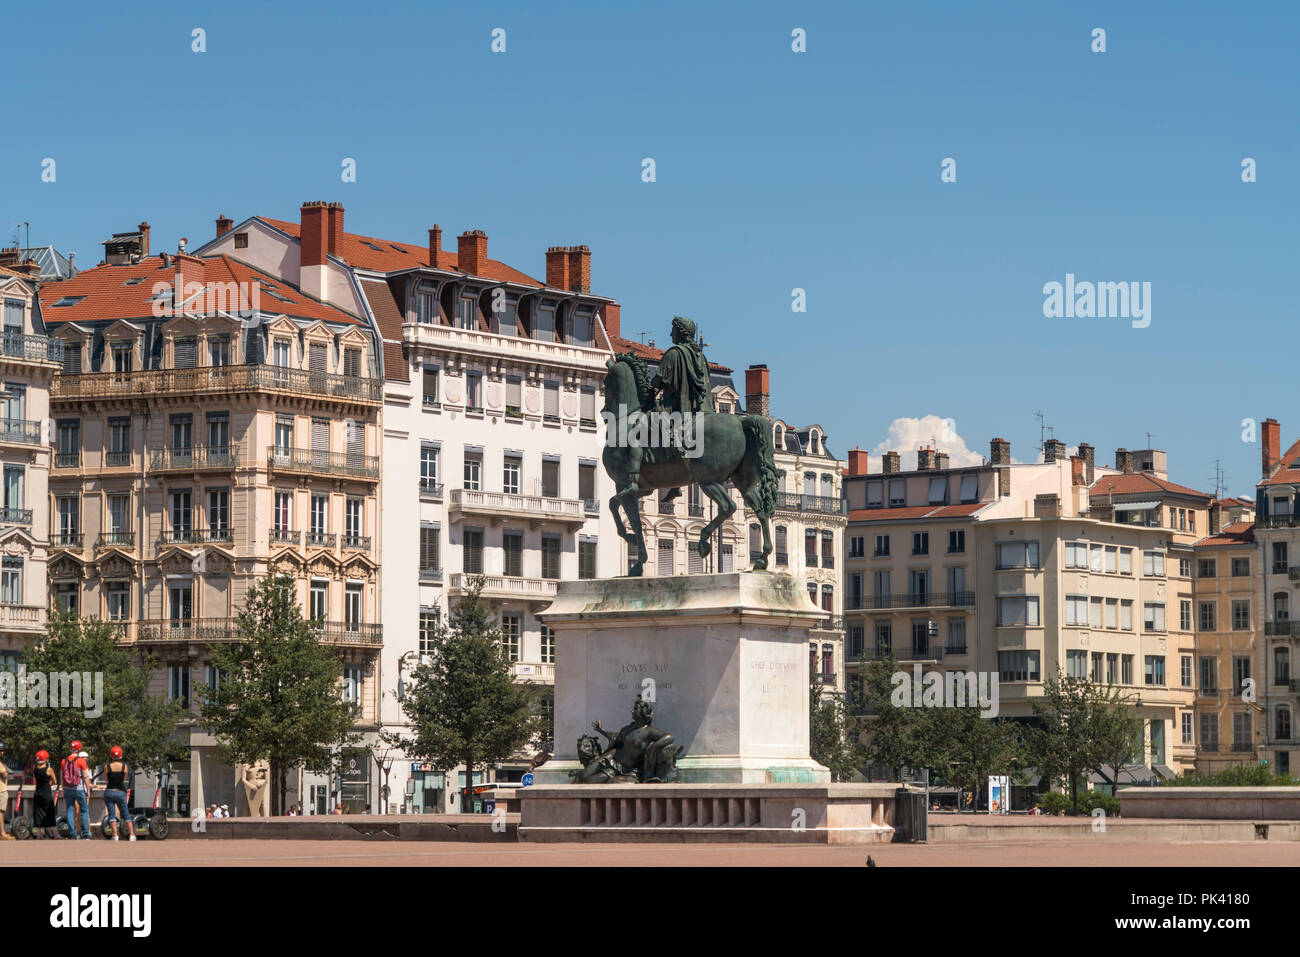 Reiterstandbild von Ludwig XIV auf dem Platz Place Bellecour, Lyon, Auvergne-Rhone-Alpes, Frankreich  |  Equestrian statue of Louis XIV on the Place B Stock Photo